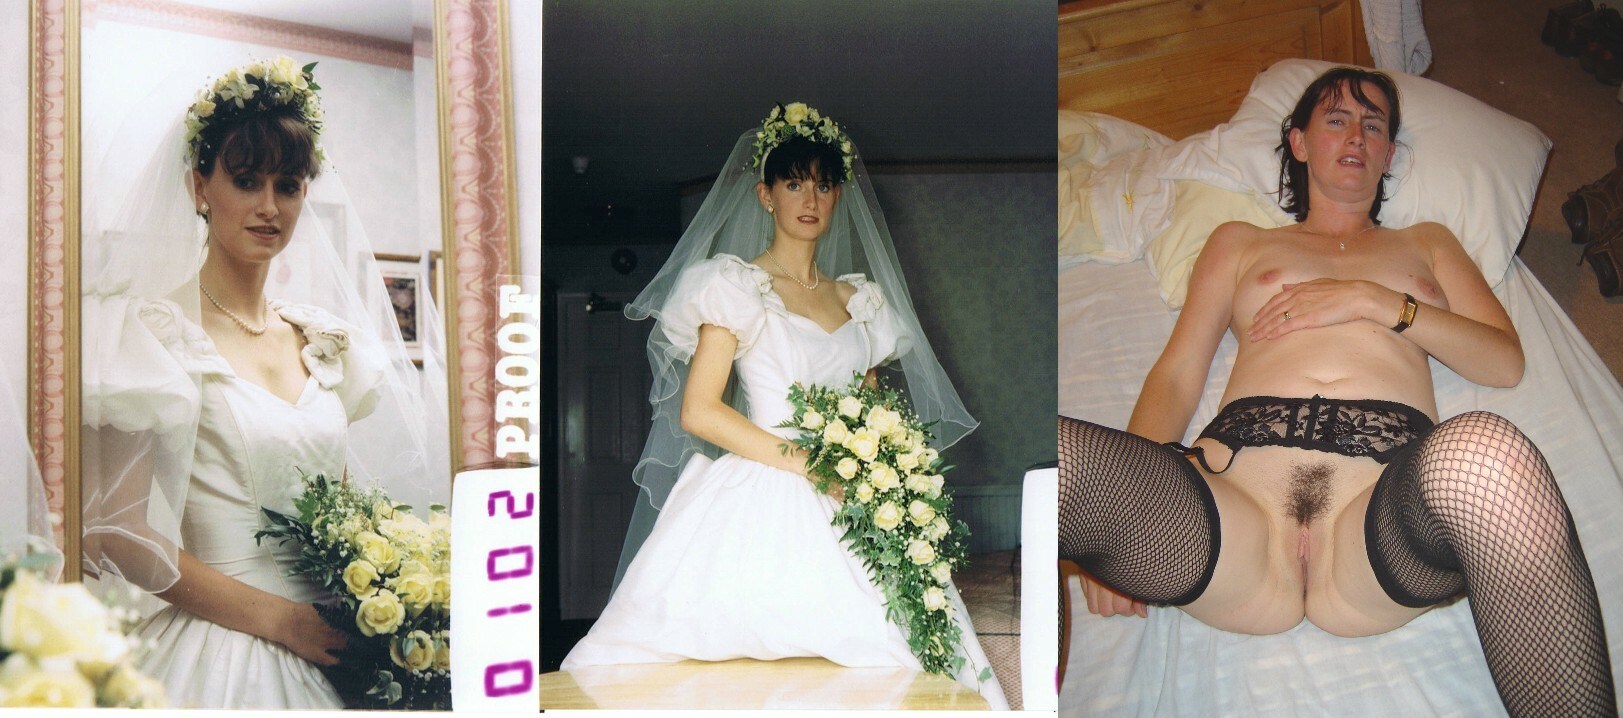 голая невеста и ее мама фото фото 44